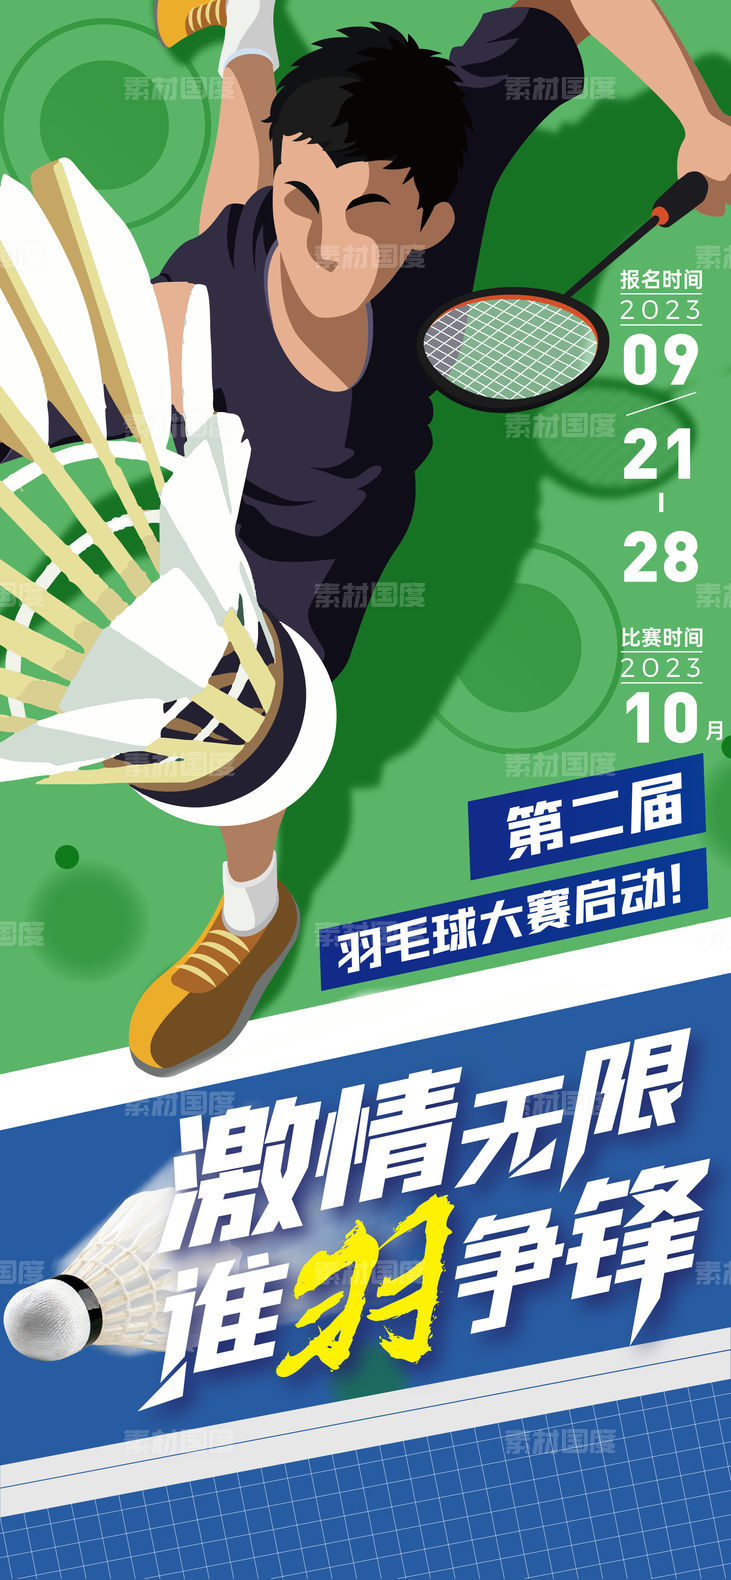 羽毛球比赛活动海报